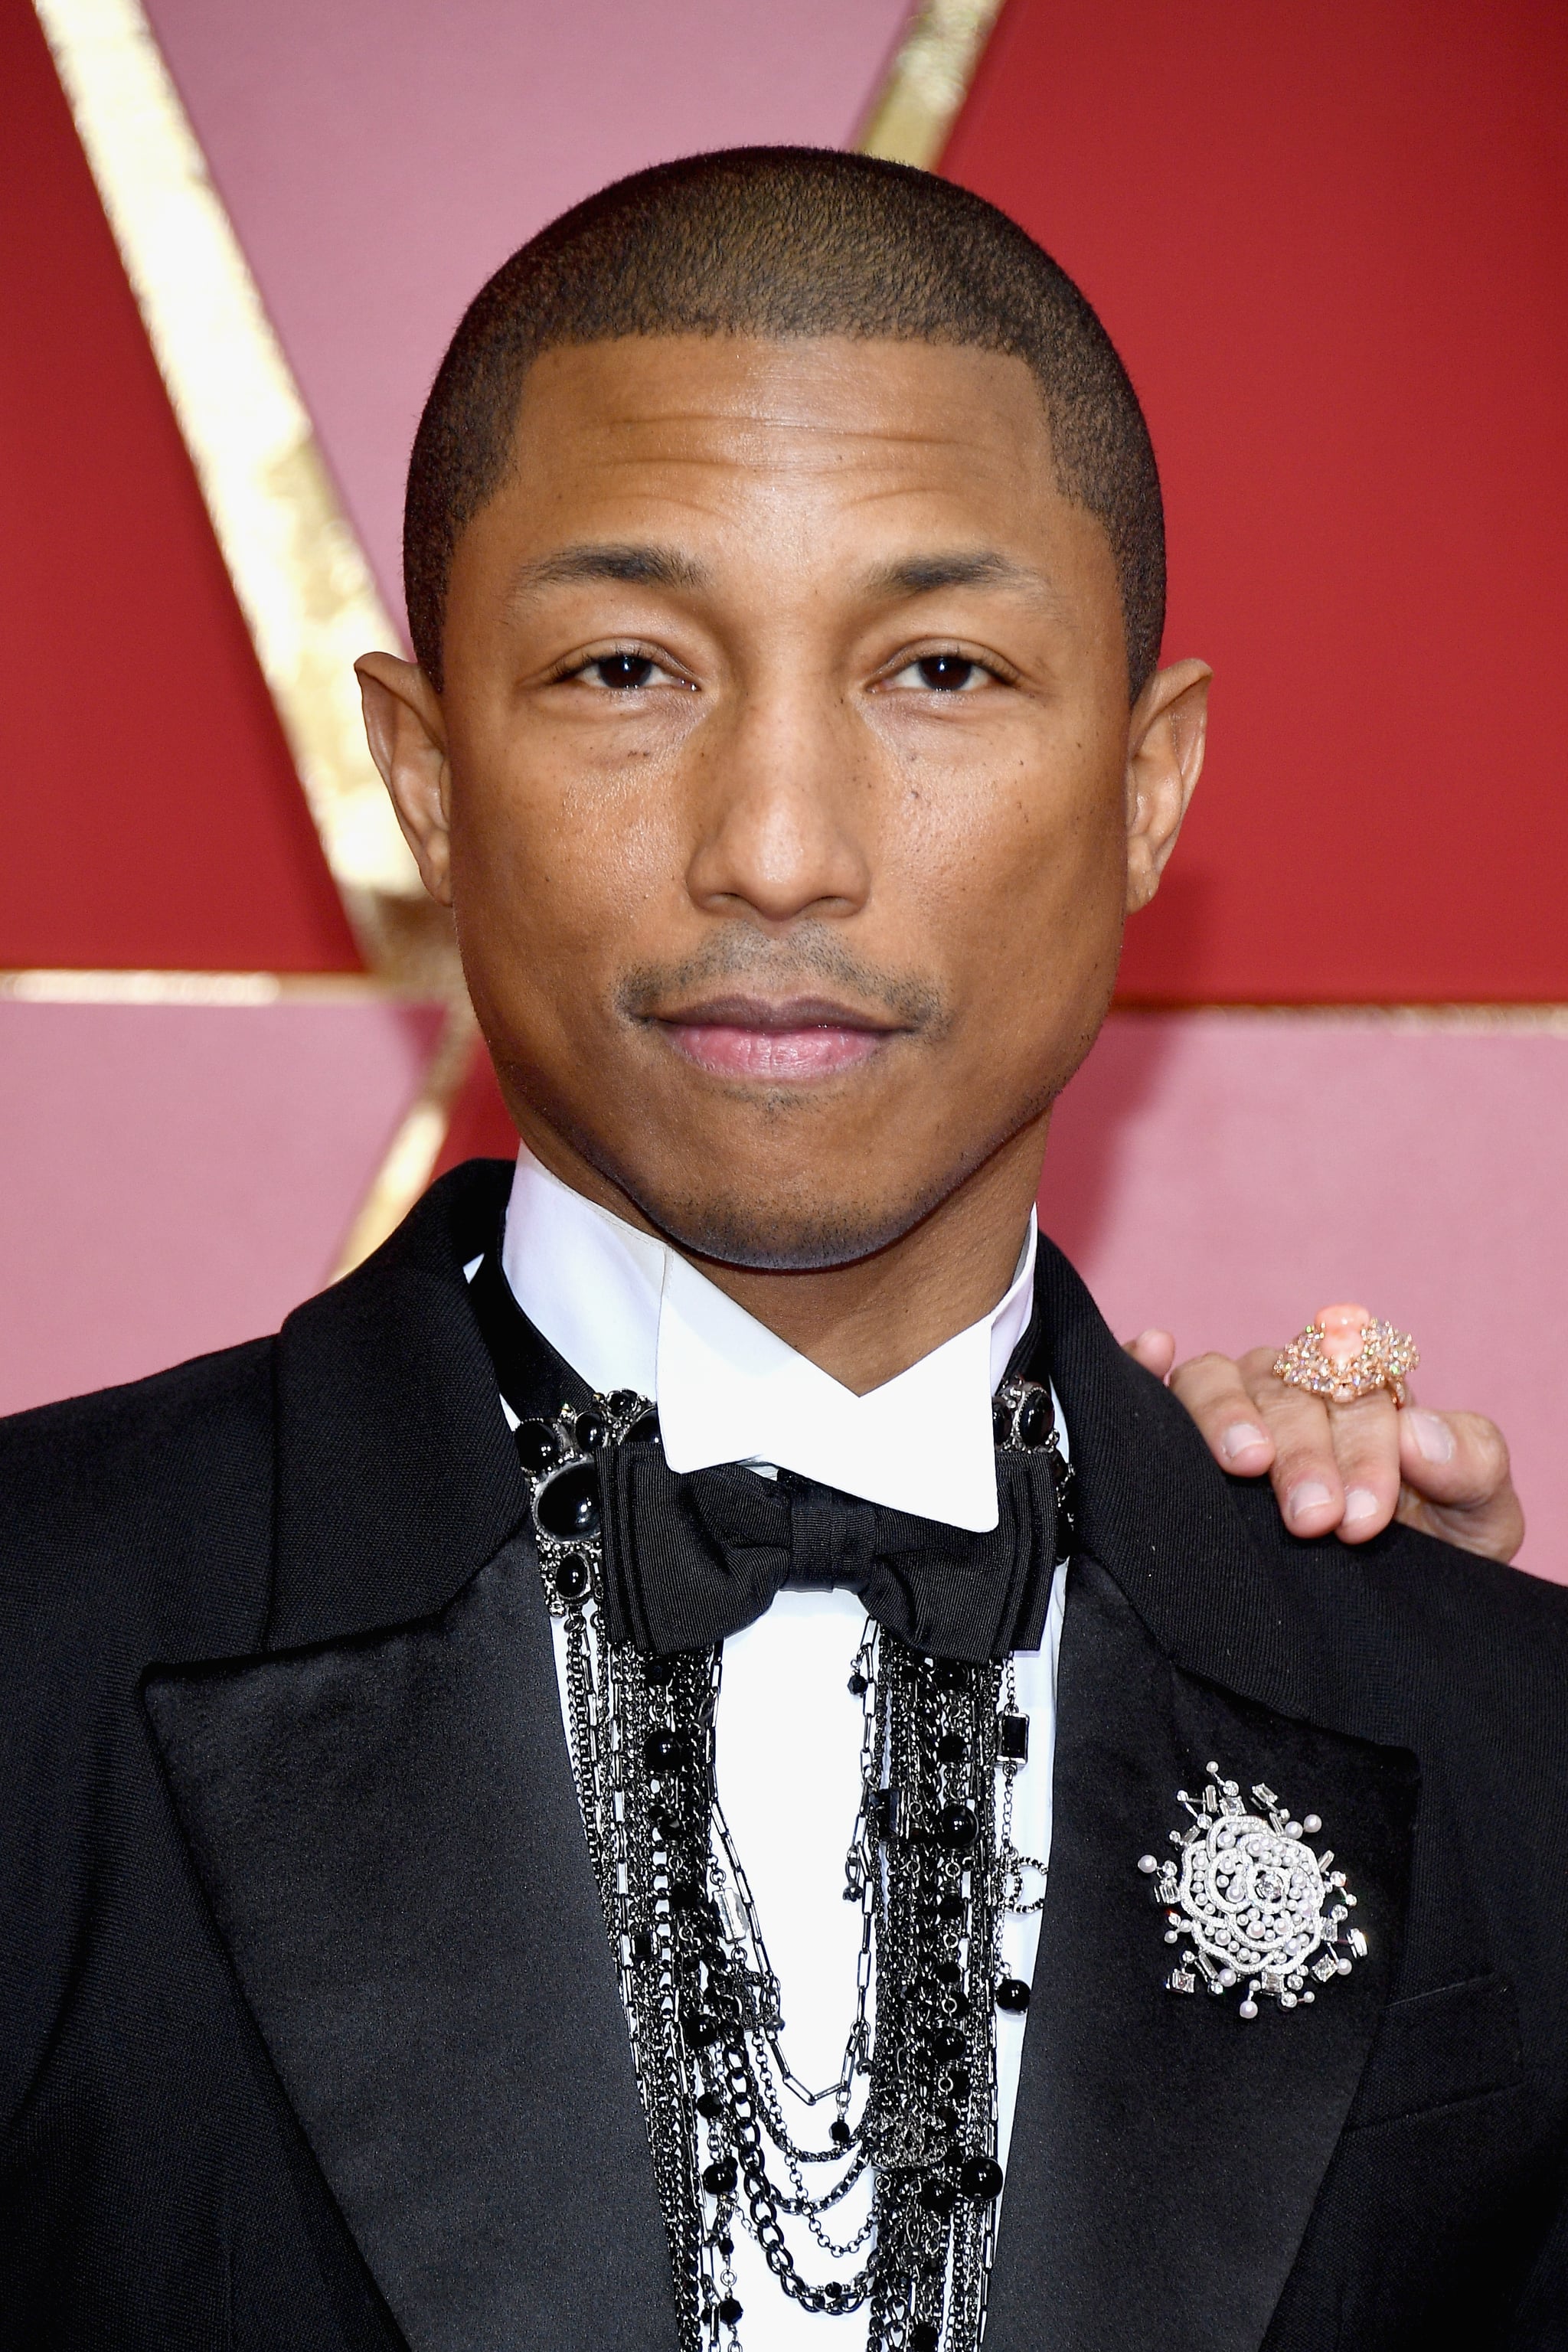 2020: Pharrell Williams